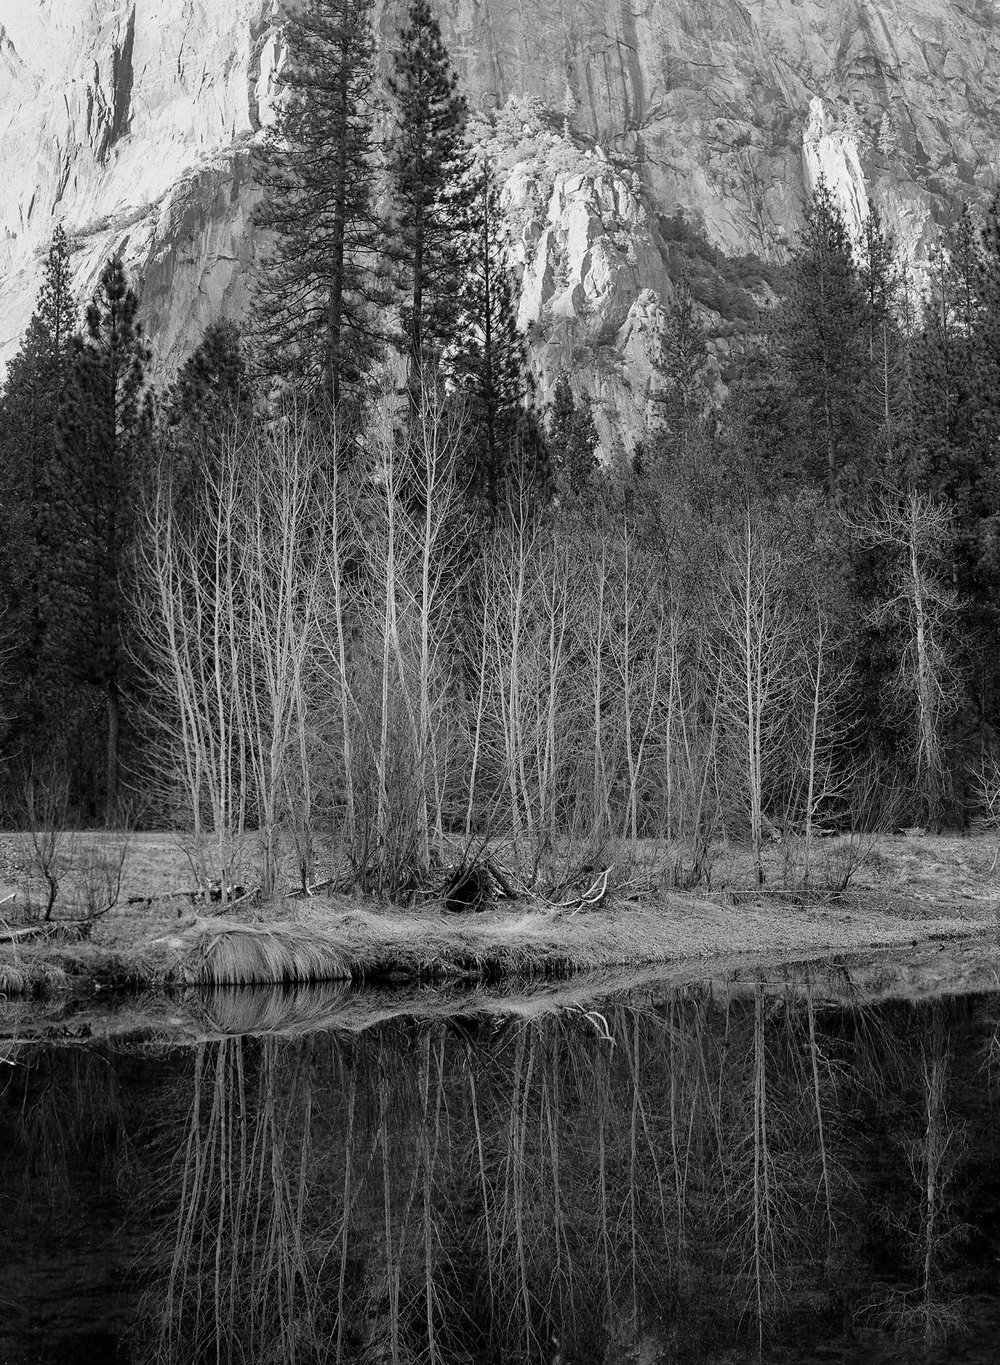 Merced Reflection, Yosemite Valley